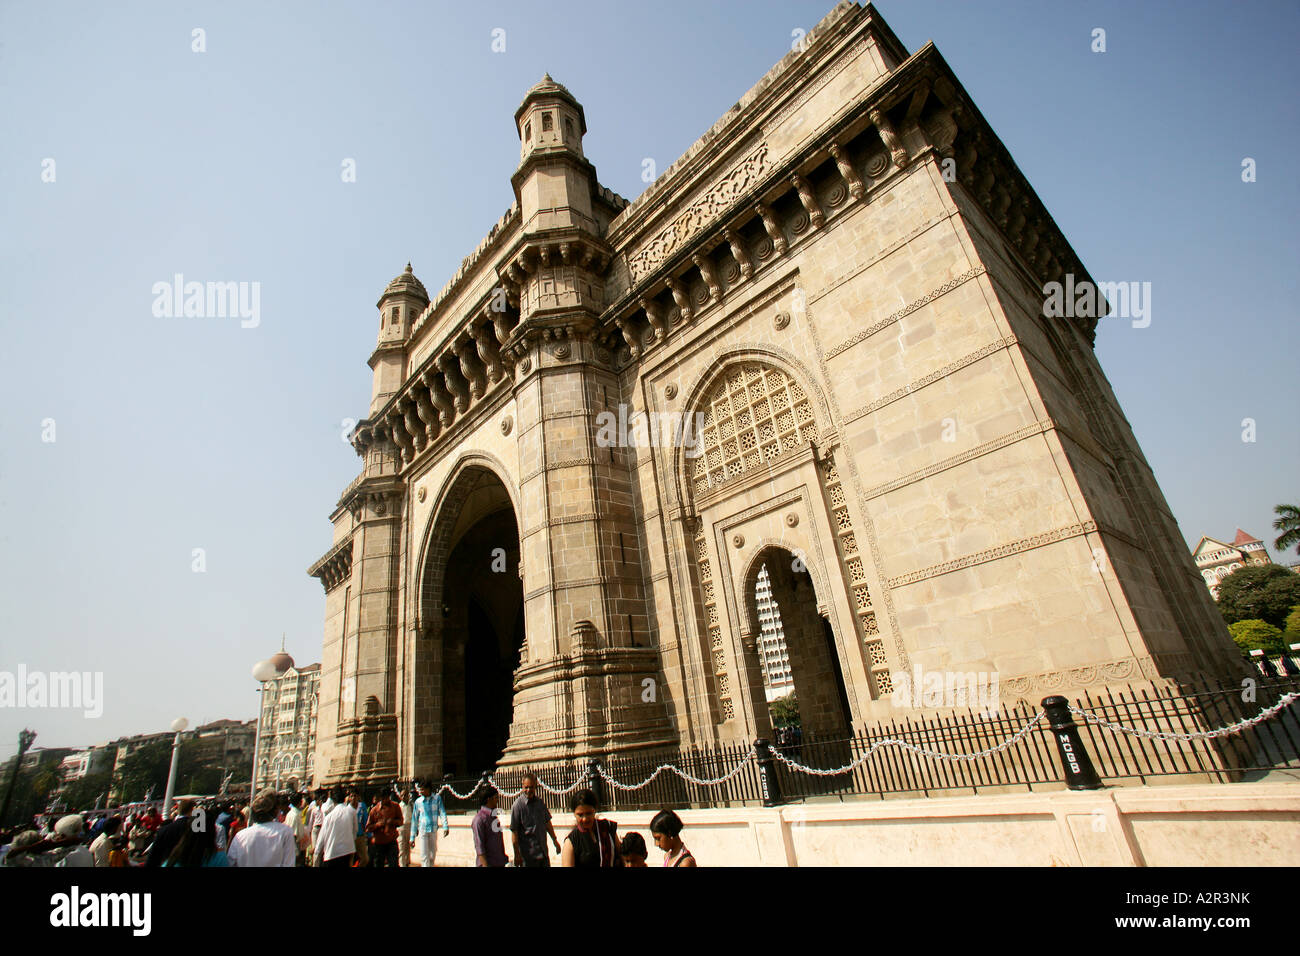 Gateway to India in Mumbai, bombay Stock Photo